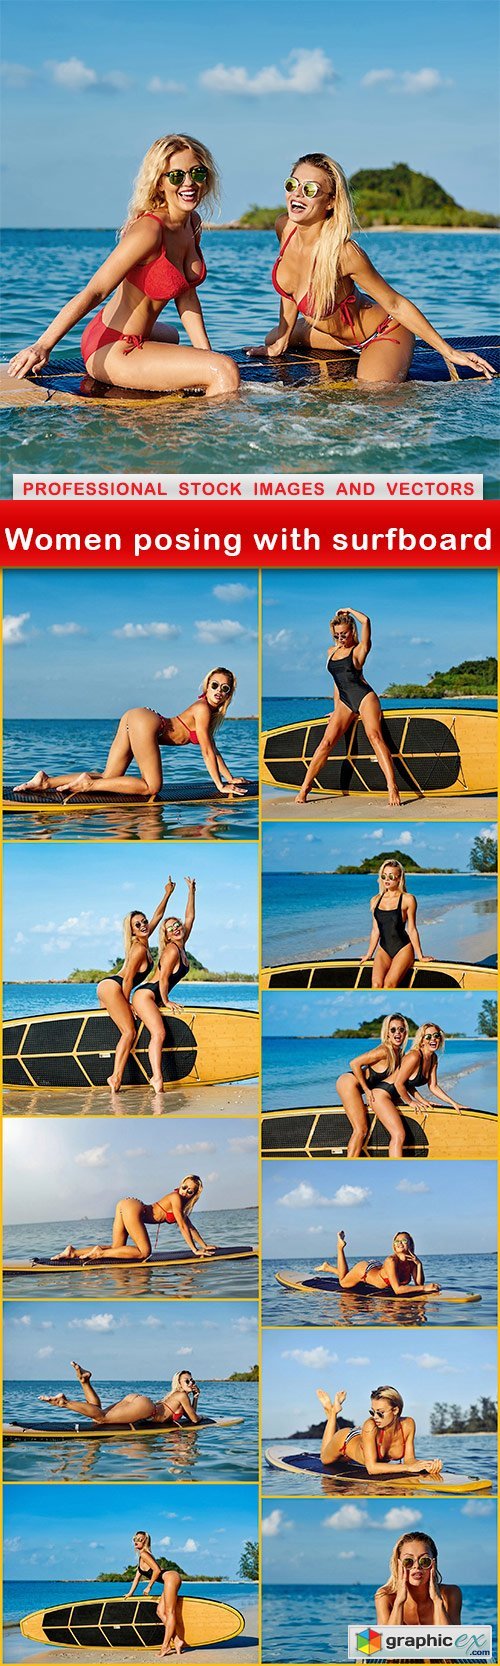 Women posing with surfboard - 12 UHQ JPEG